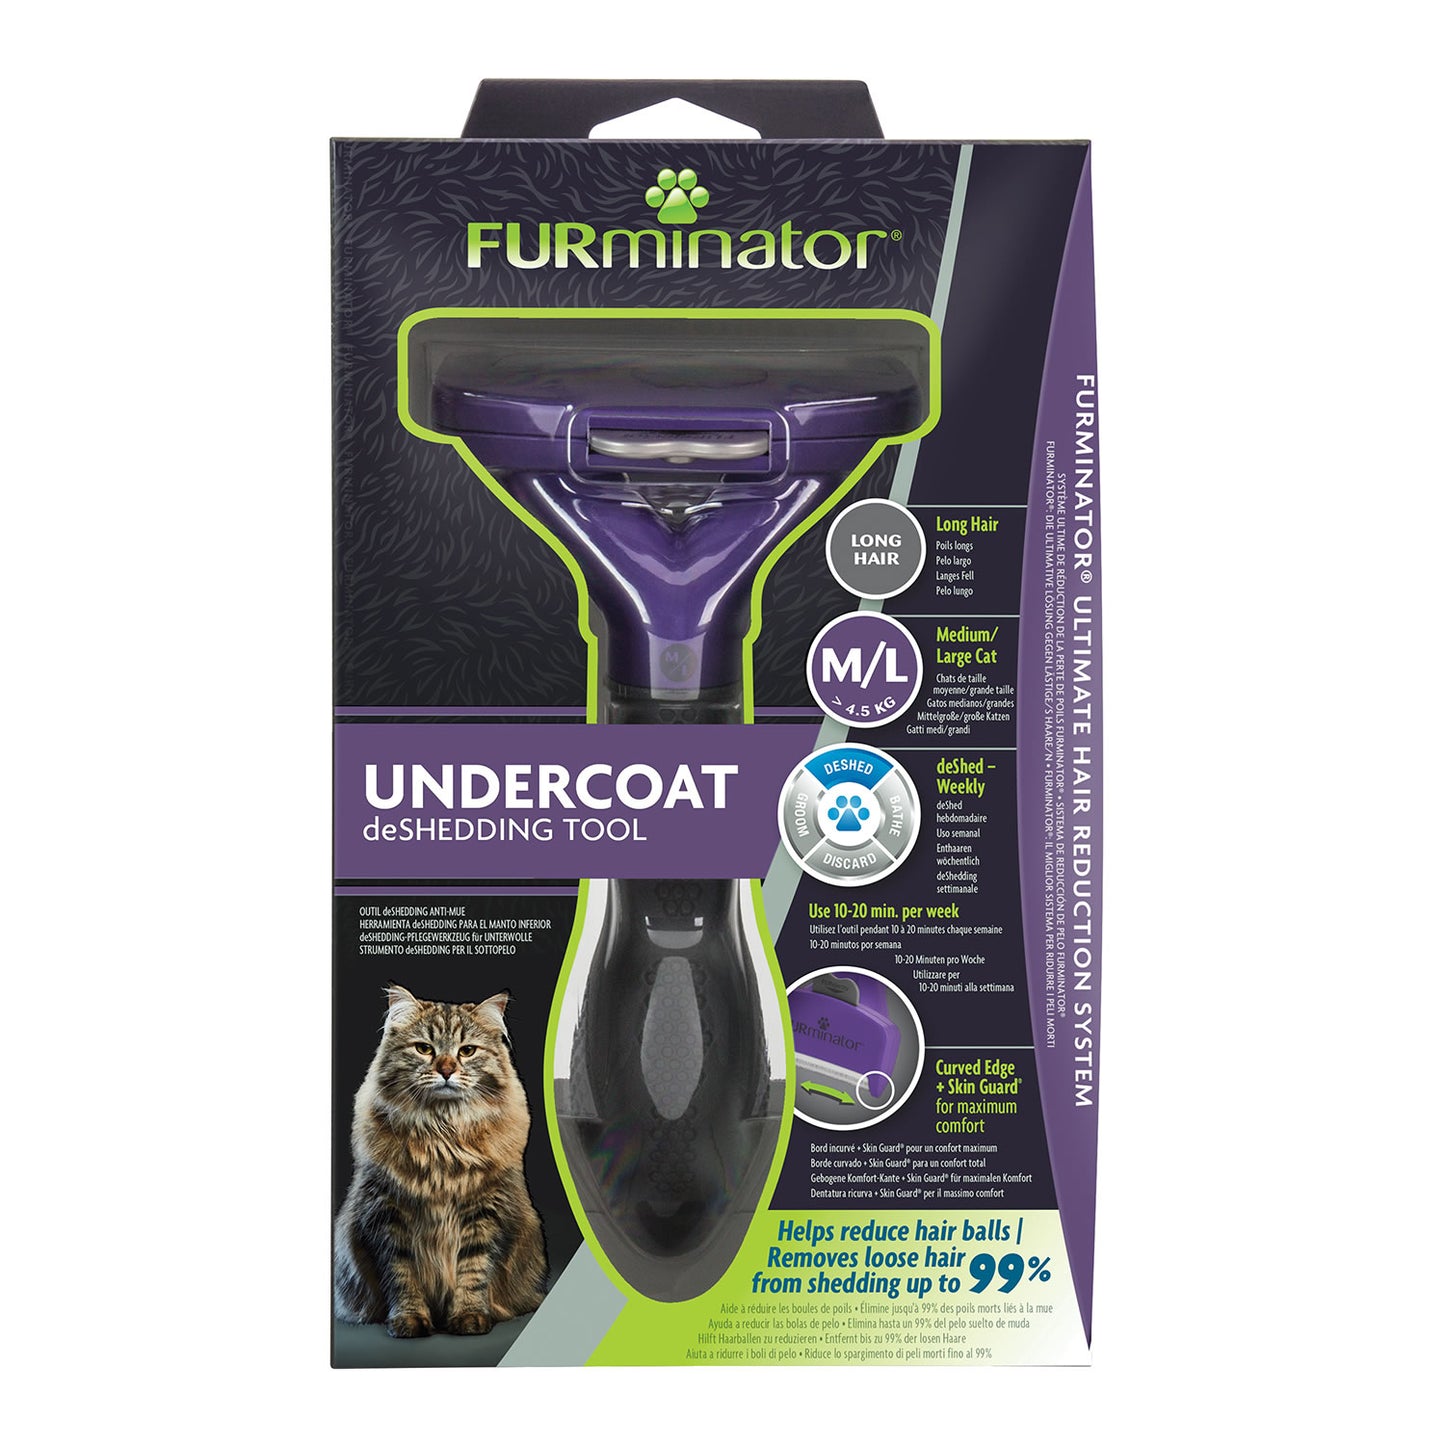 Furminator Undercoat DeShedding Tool for Long Hair Cat